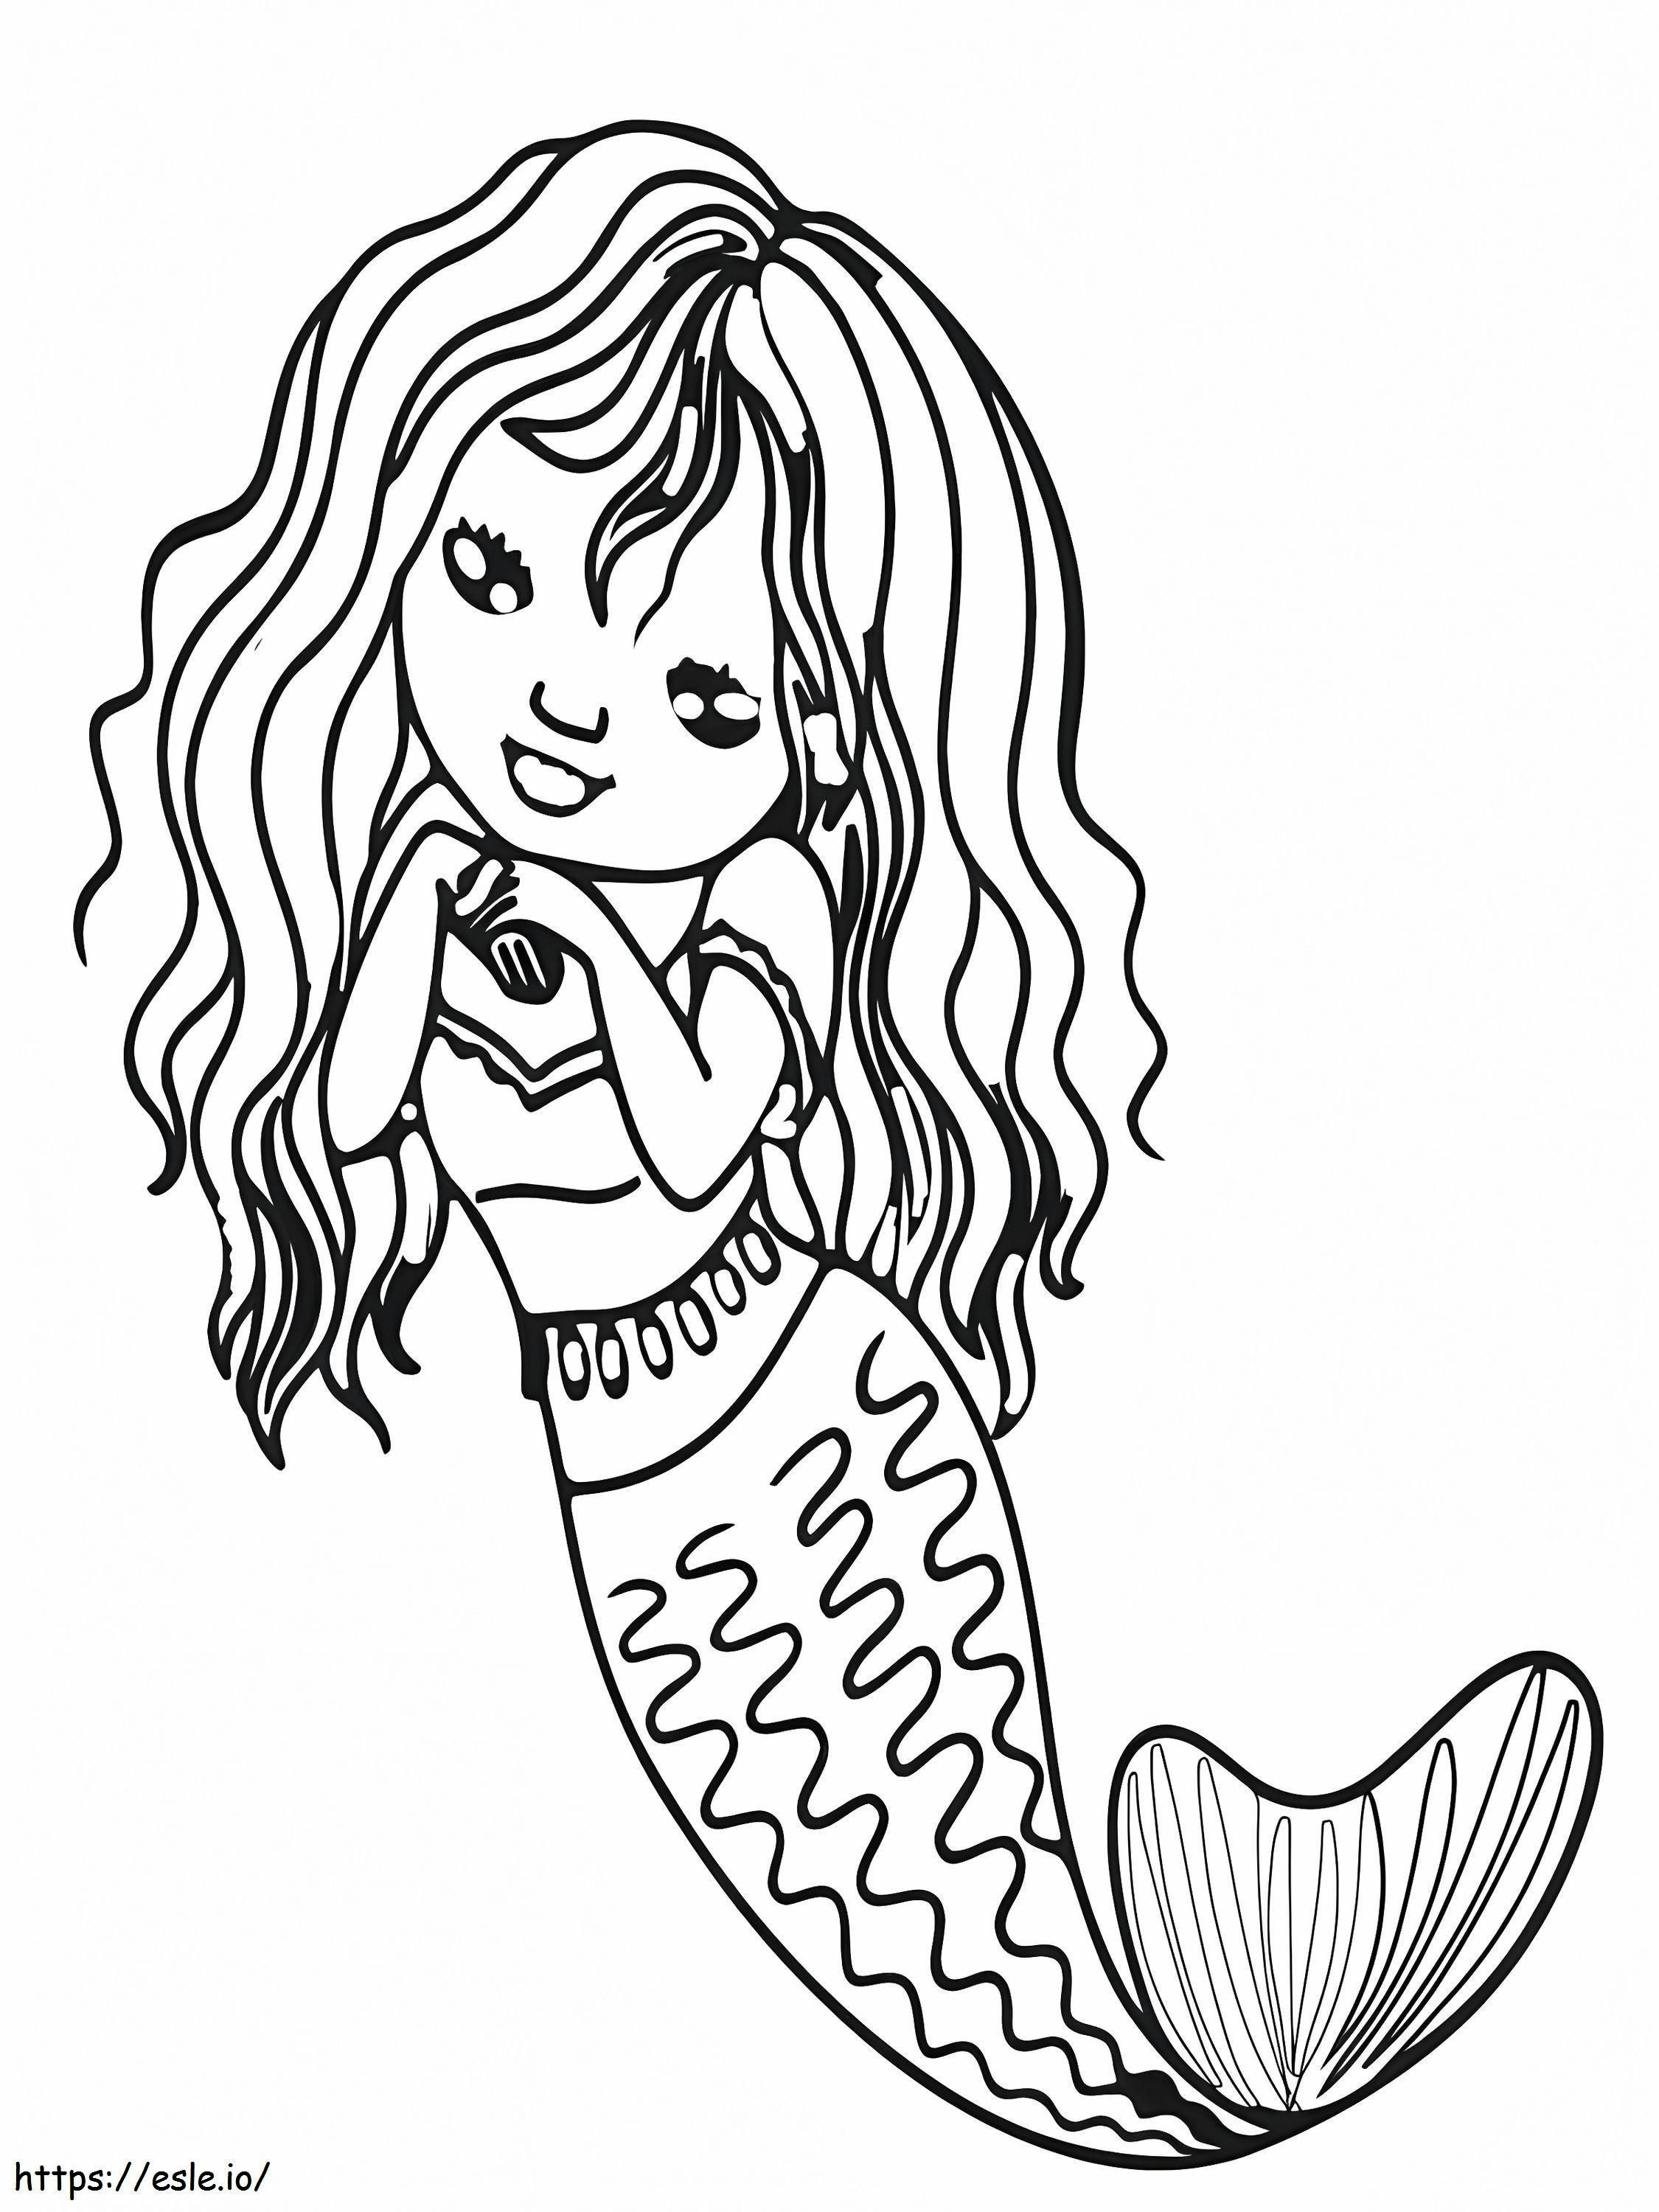 Caring Mermaid coloring page